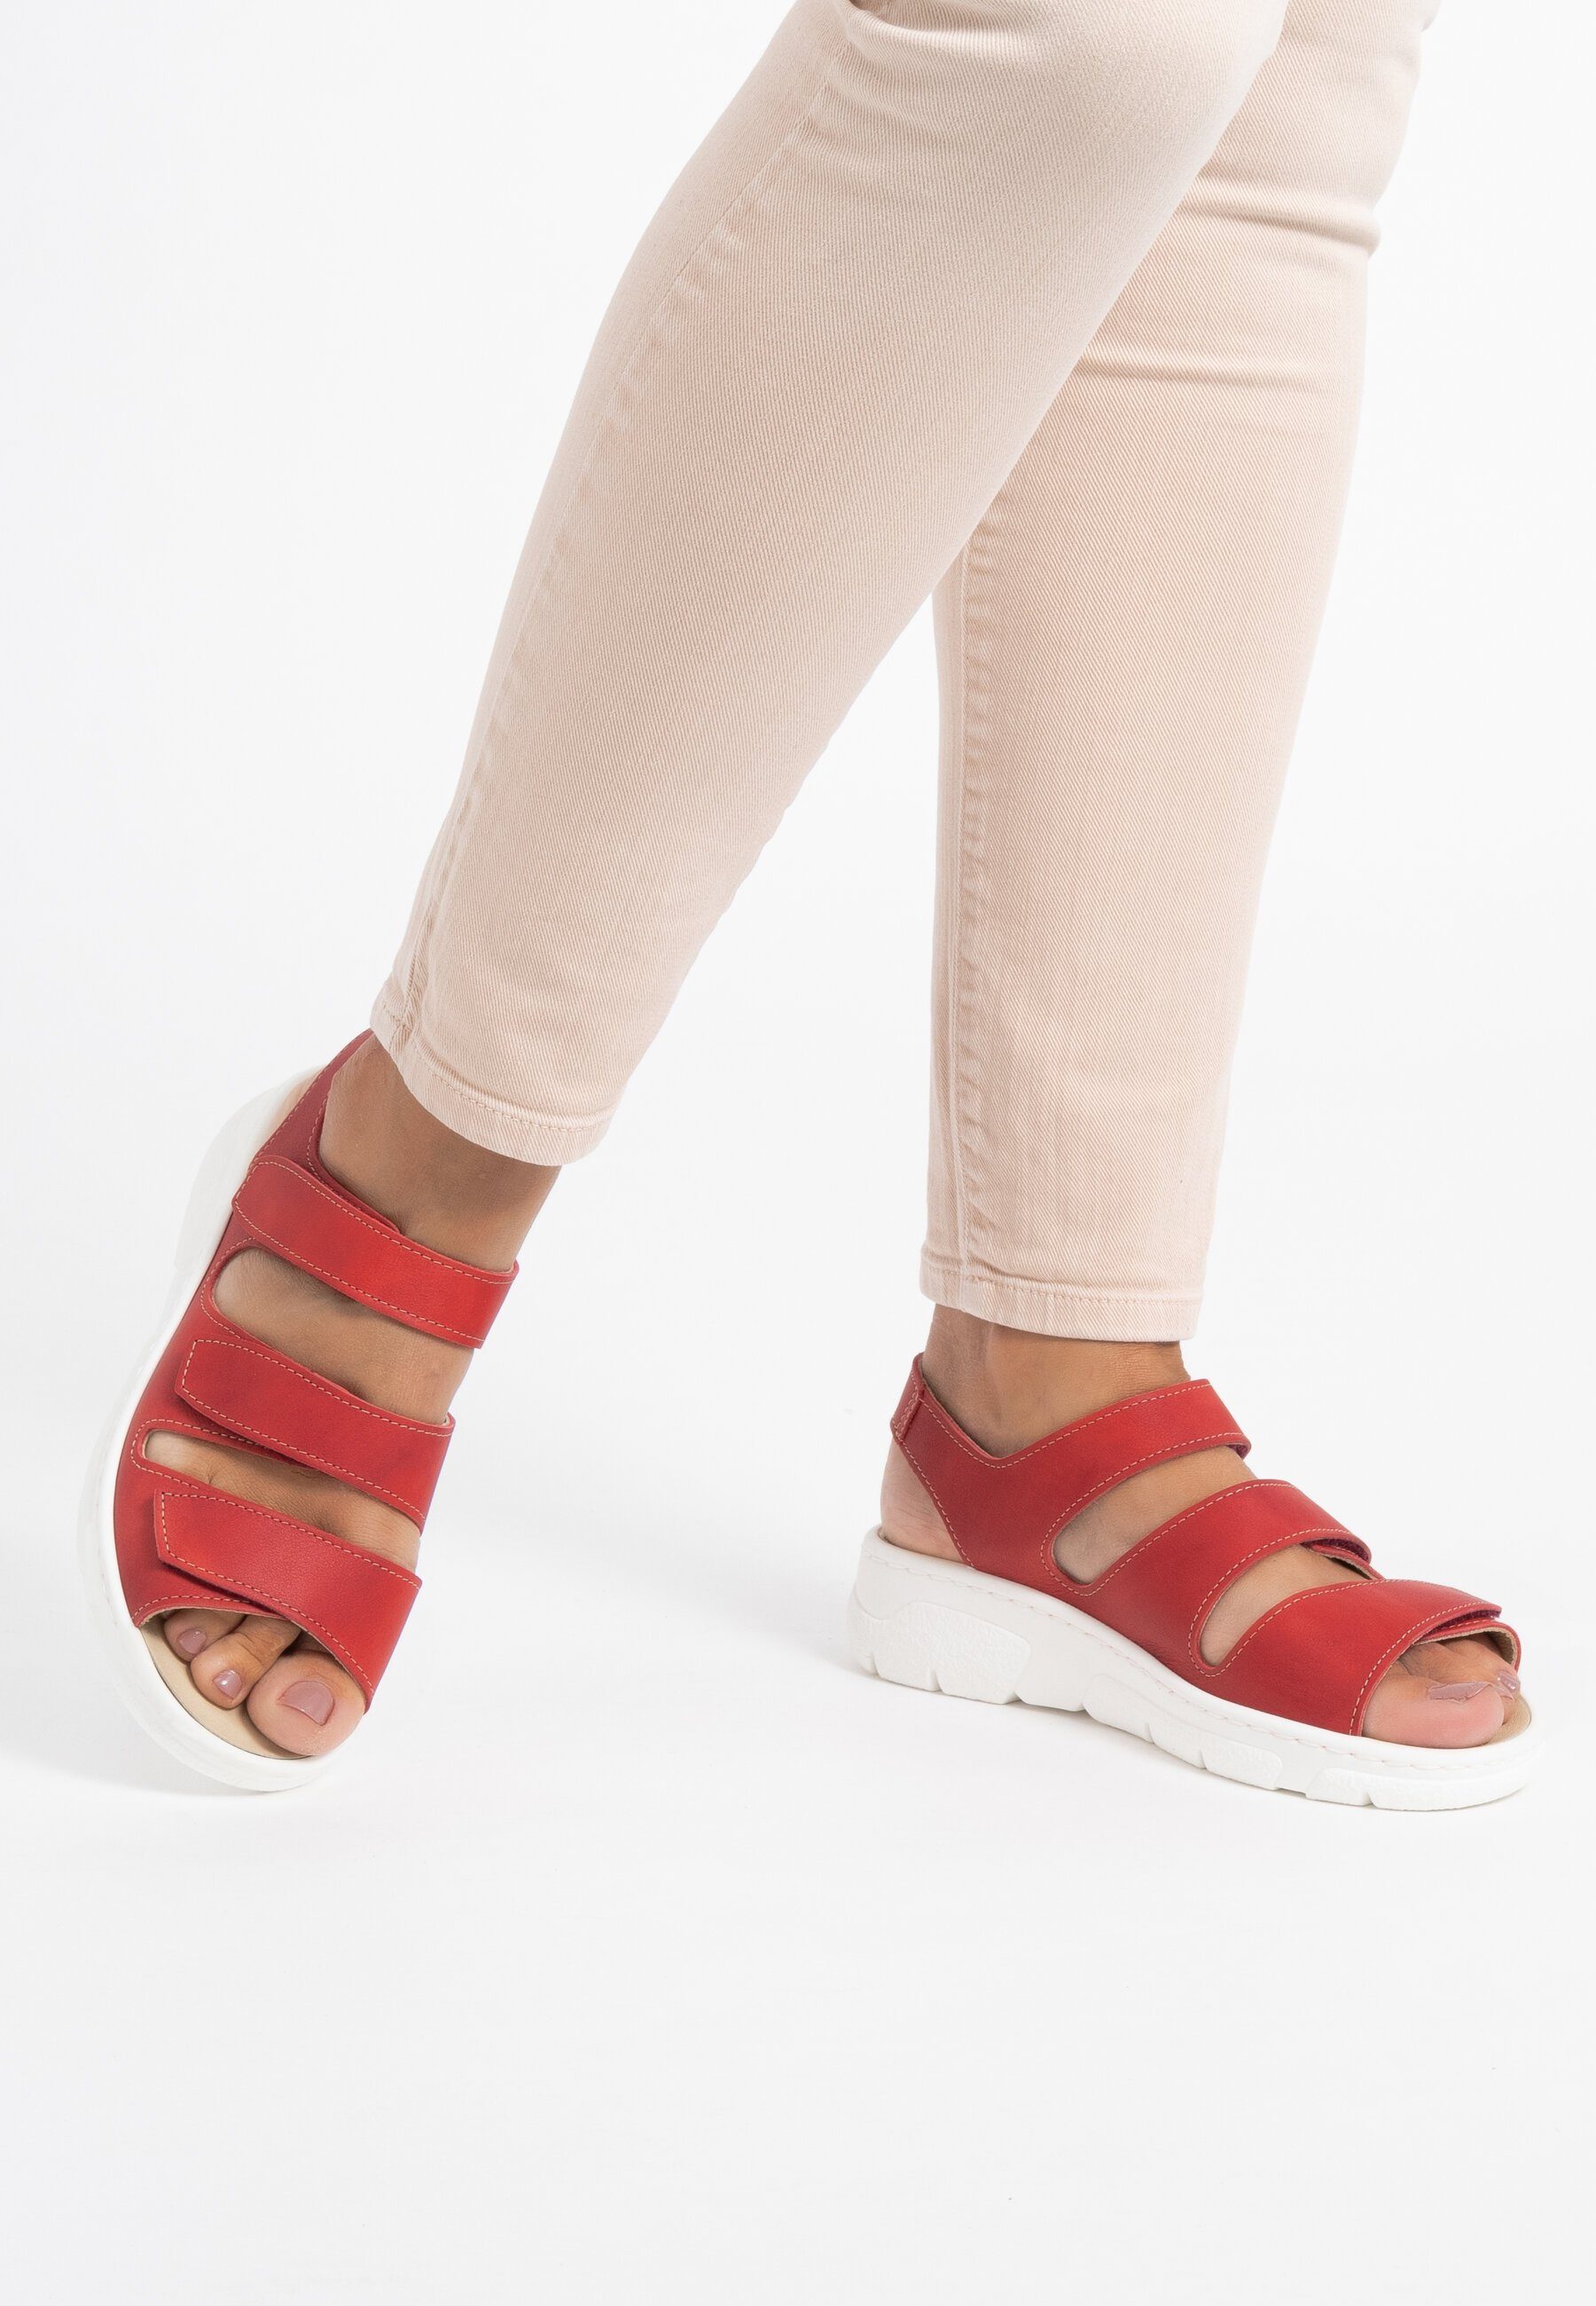 vitaform Sandale Nappaleder Damenschuhe Sandale rot